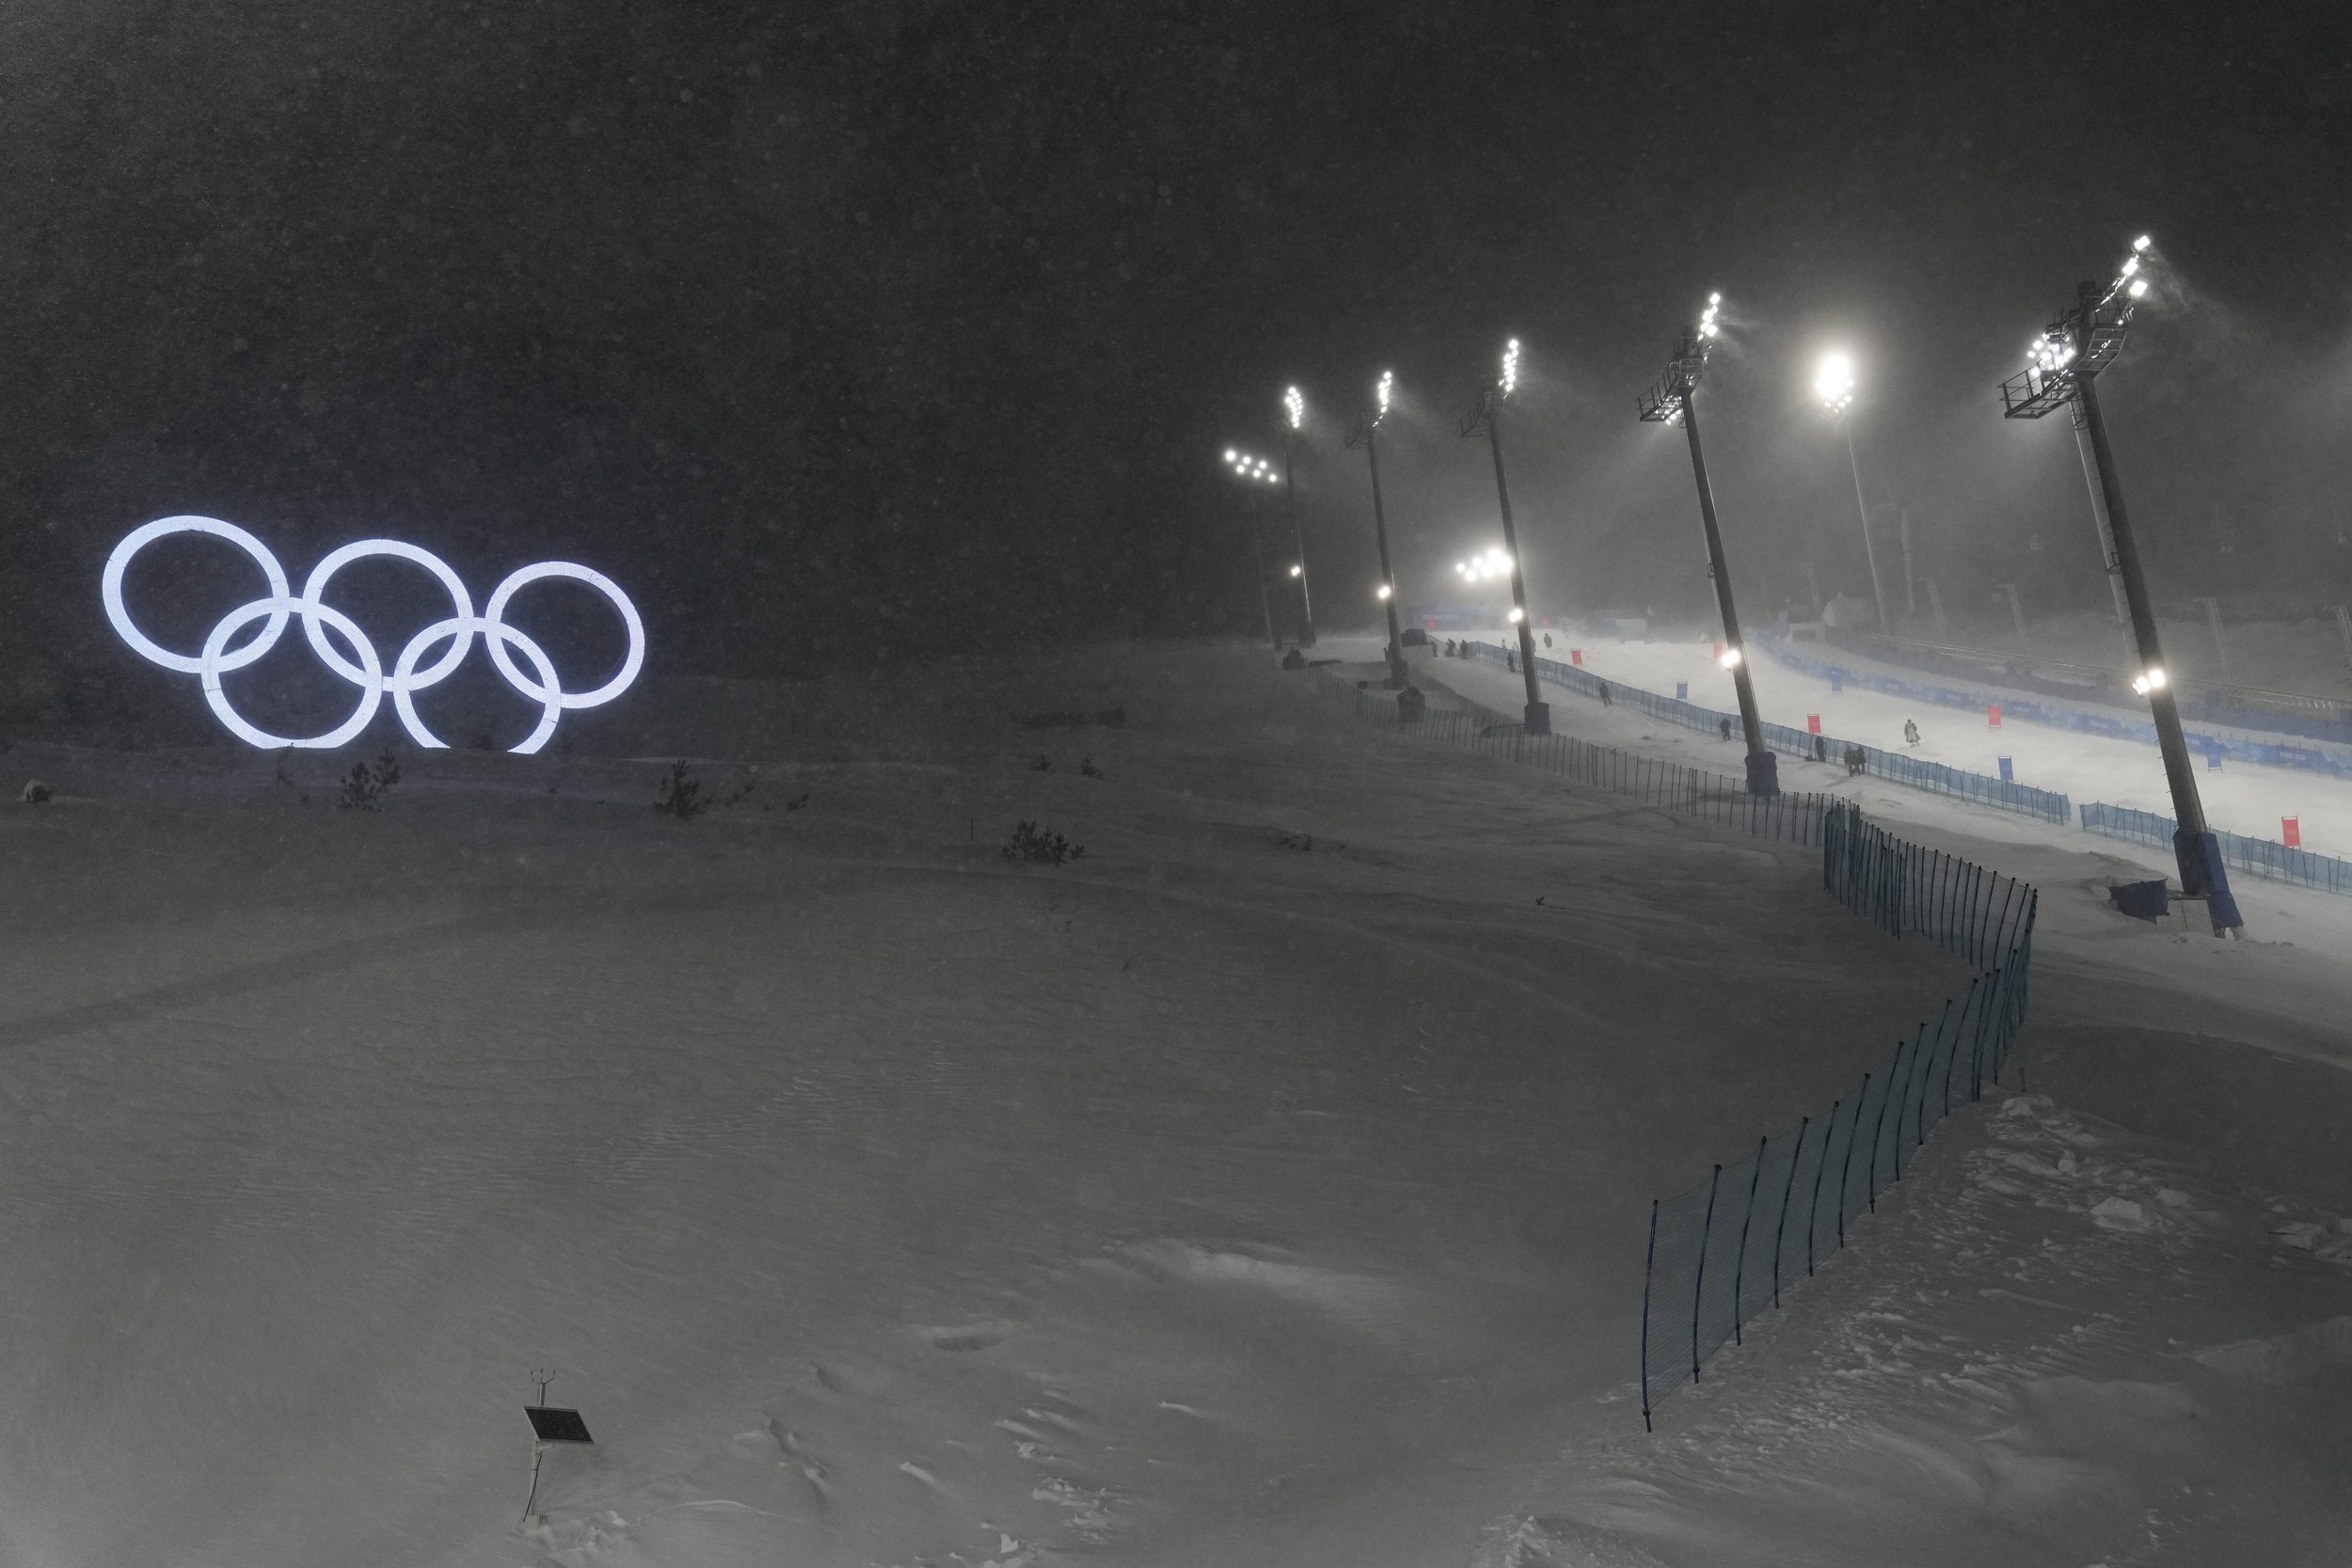  Olympic rings sit next to the moguls course ahead of the 2022 Winter Olympics, Sunday, Jan. 30, 2022, in Zhangjiakou, China. (AP Photo/Jae C. Hong) 